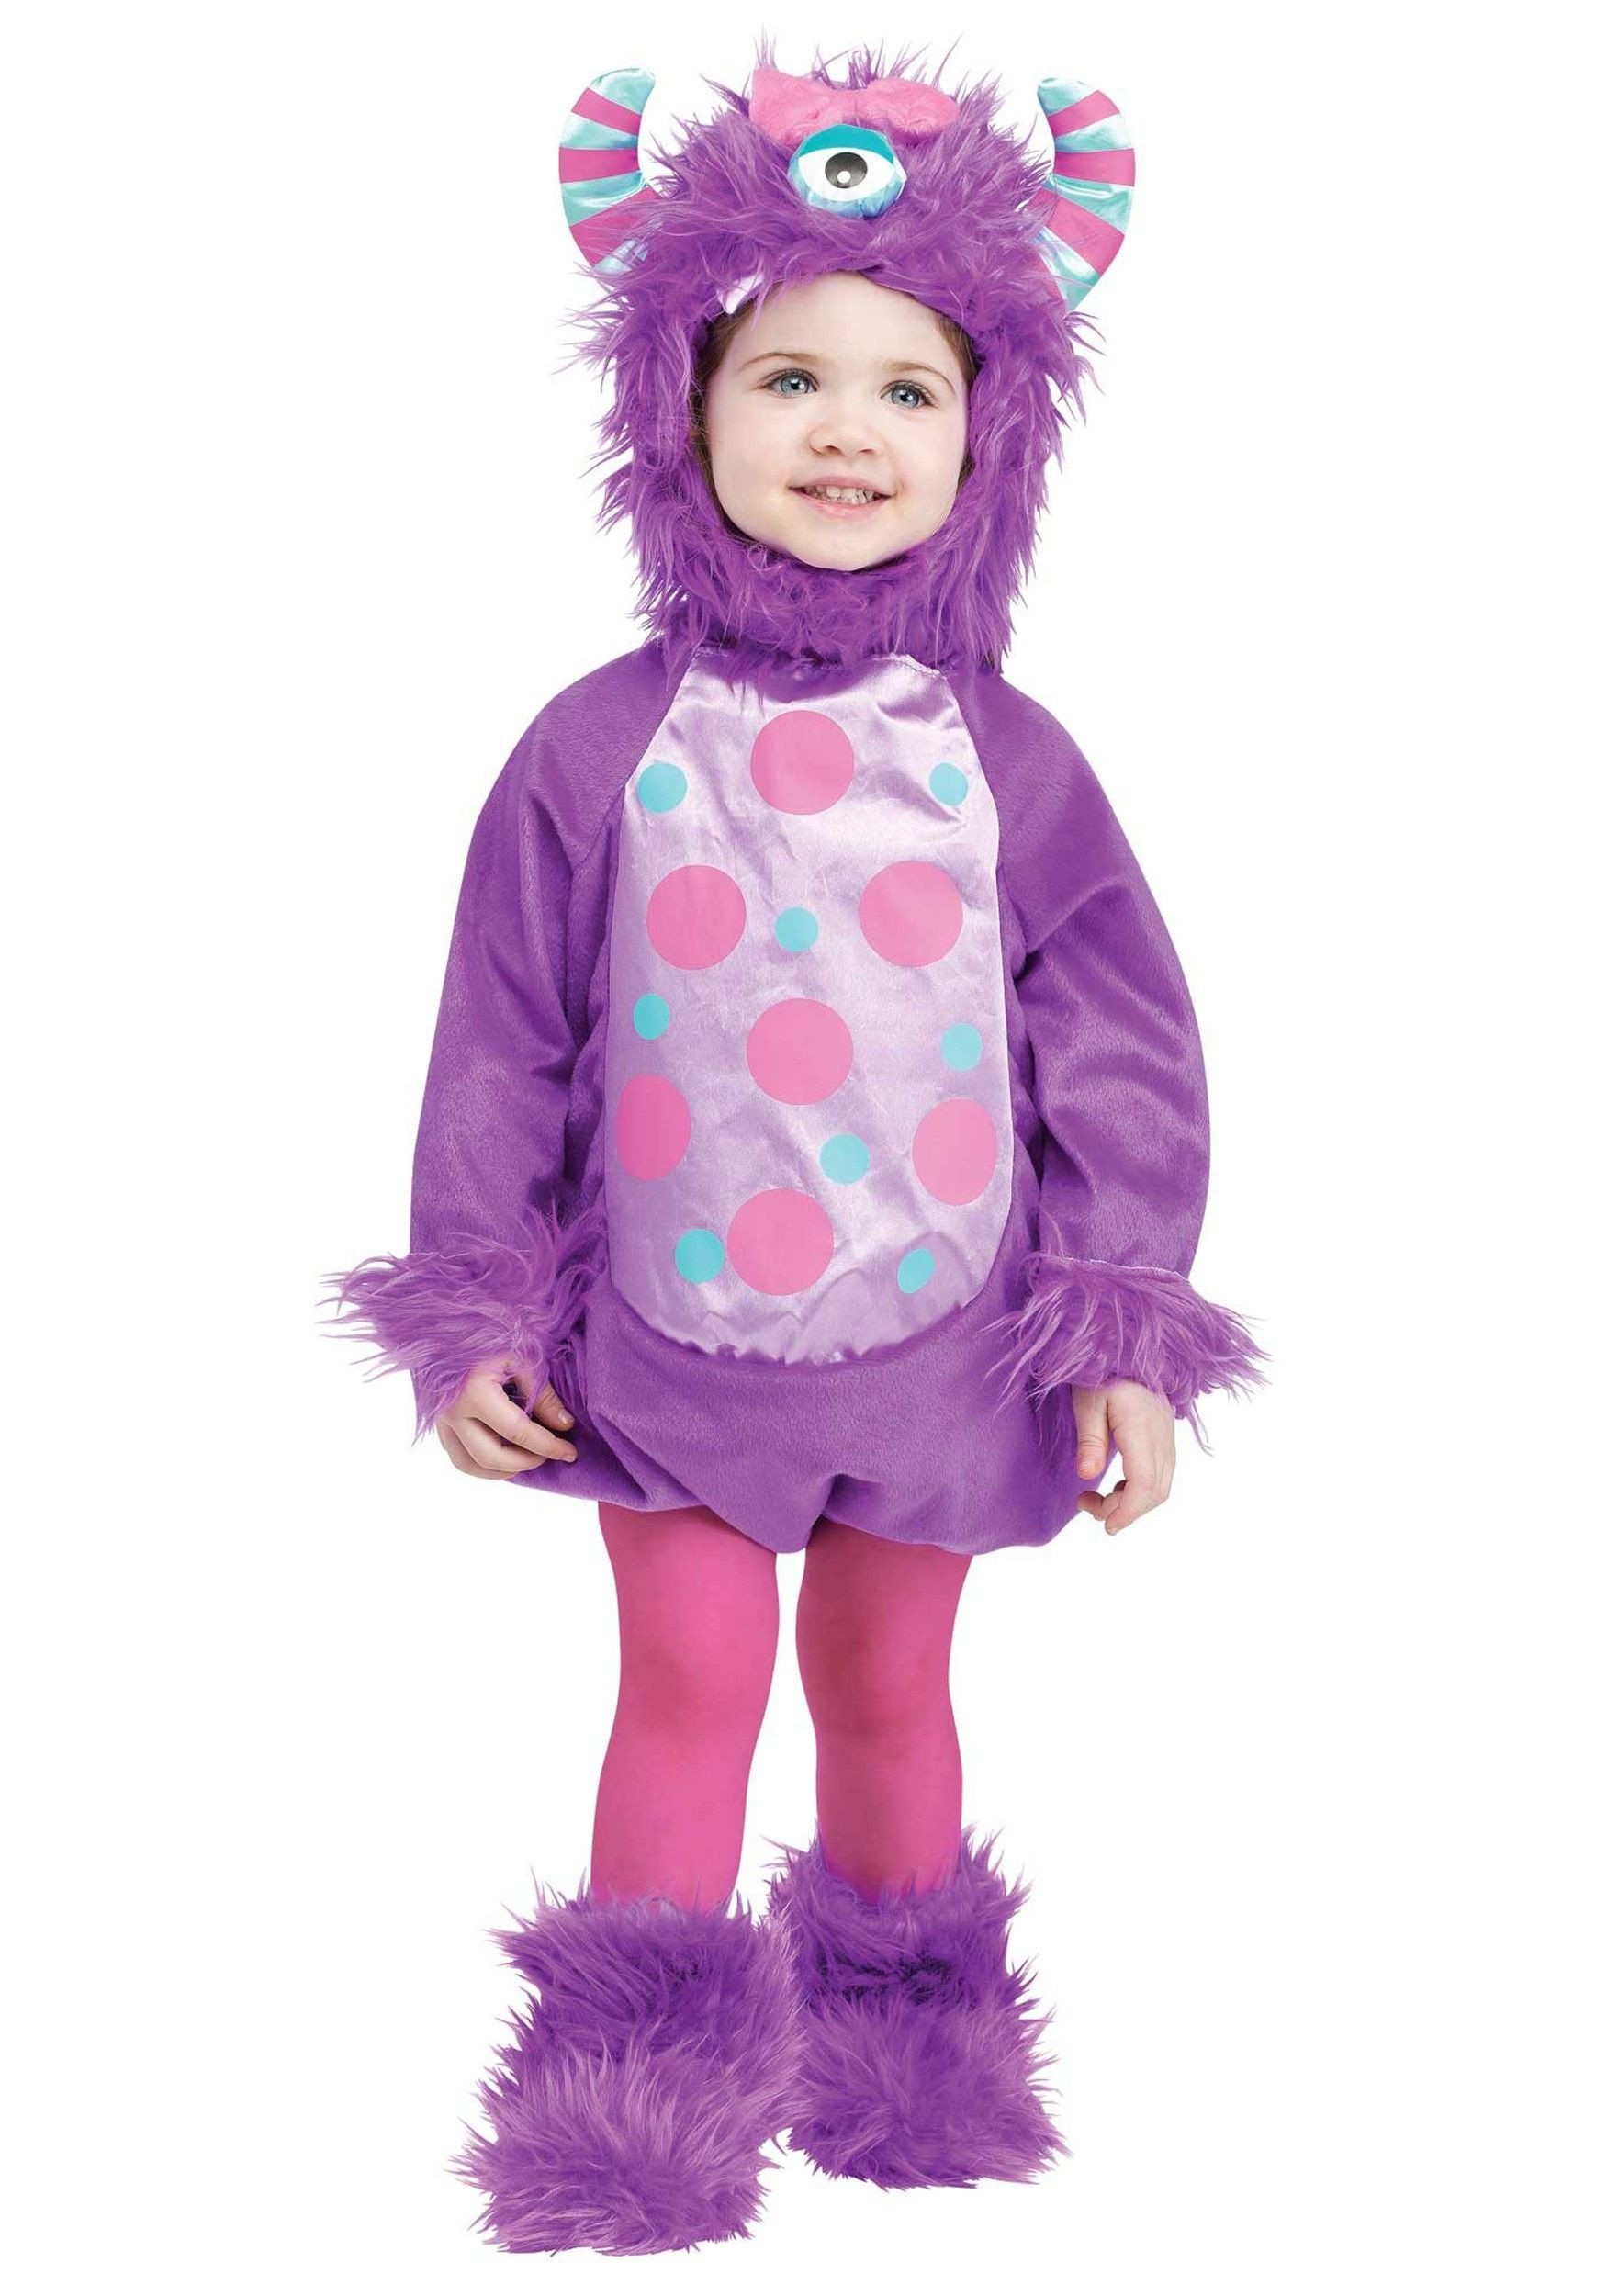 DIY Toddler Monster Costume
 Infant Monster Baby Purple Costume in 2019